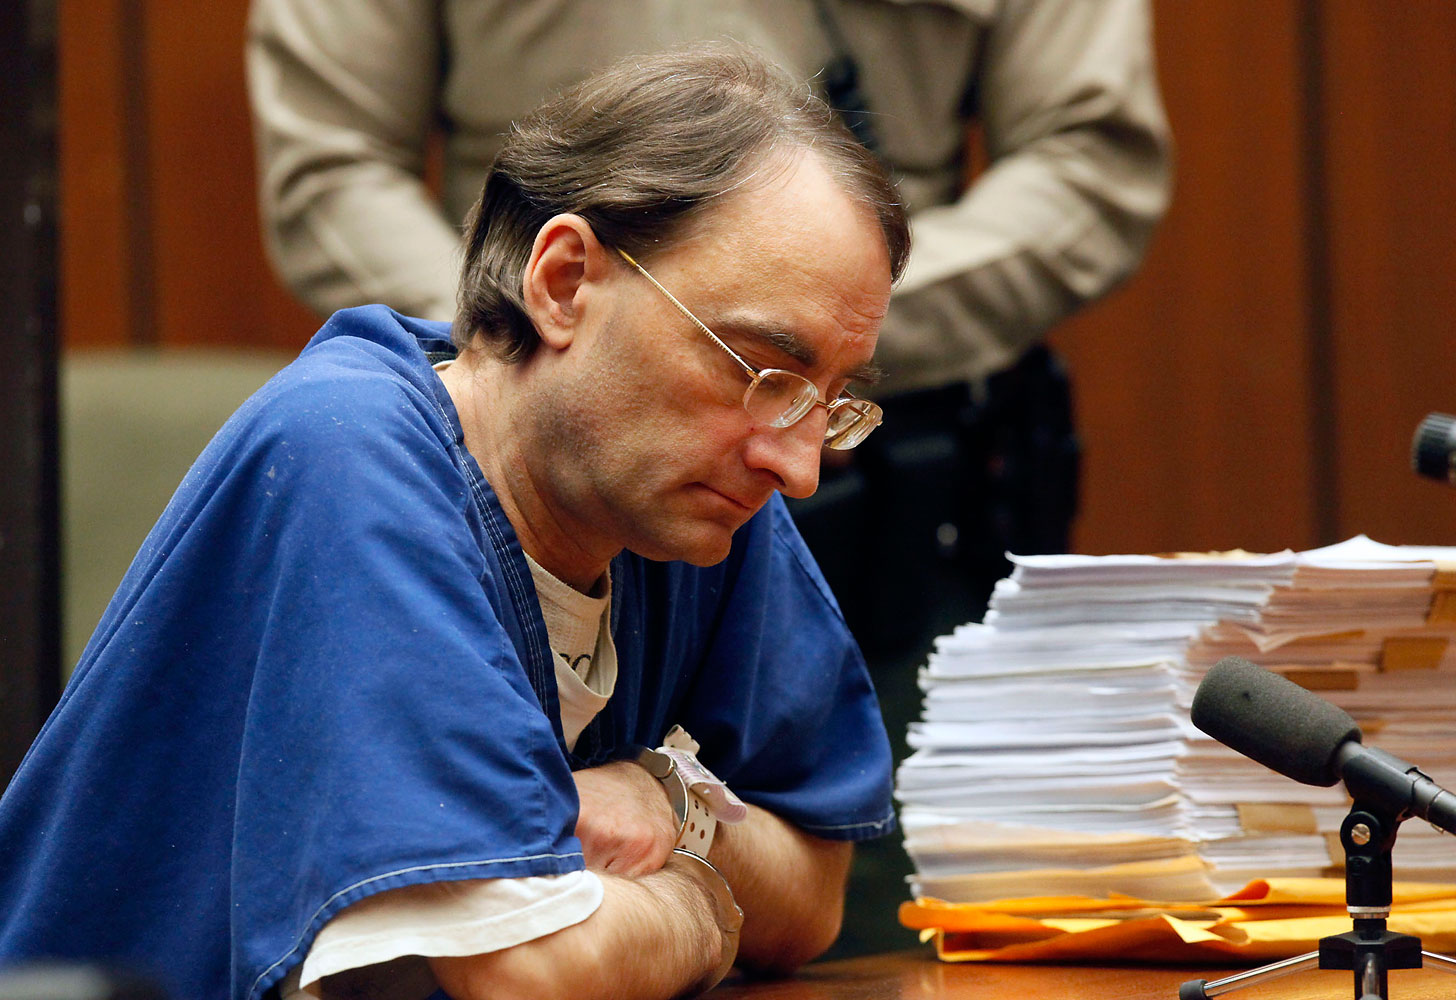 Christian Karl Gerhartsreiter during his sentencing in 2013. (Nick Ut&mdash;AP)